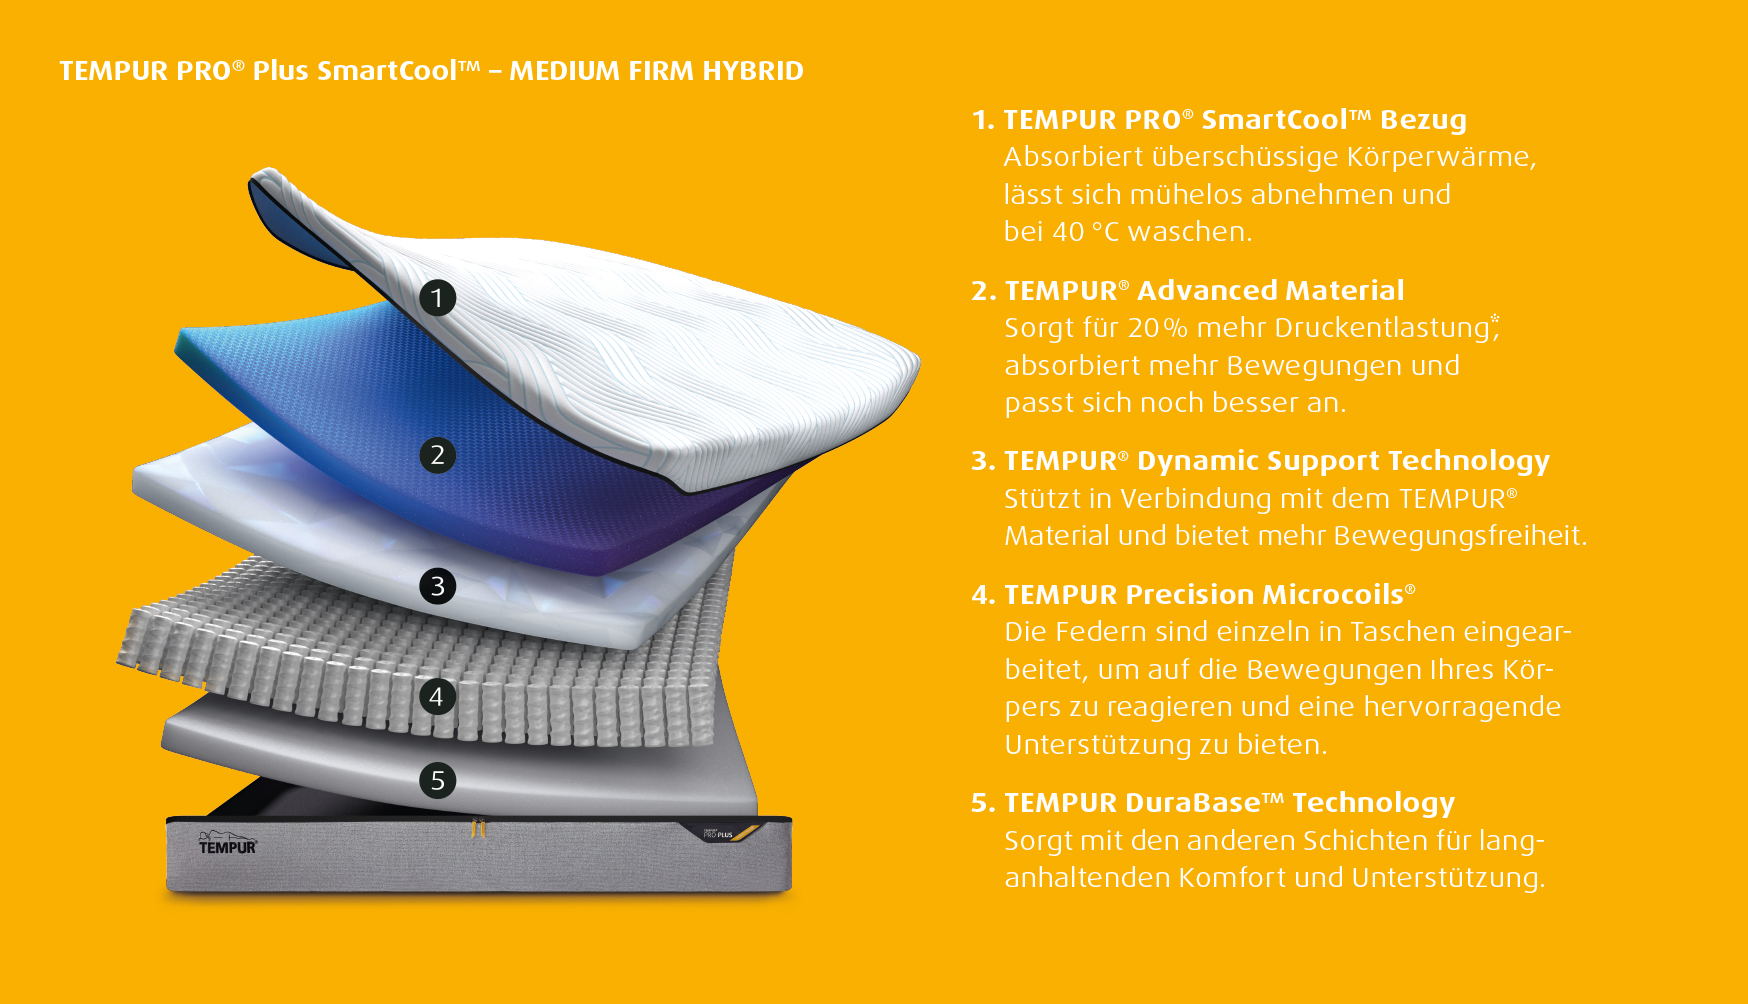 Tempur Pro Plus SmartCool Medium firm Hybrid